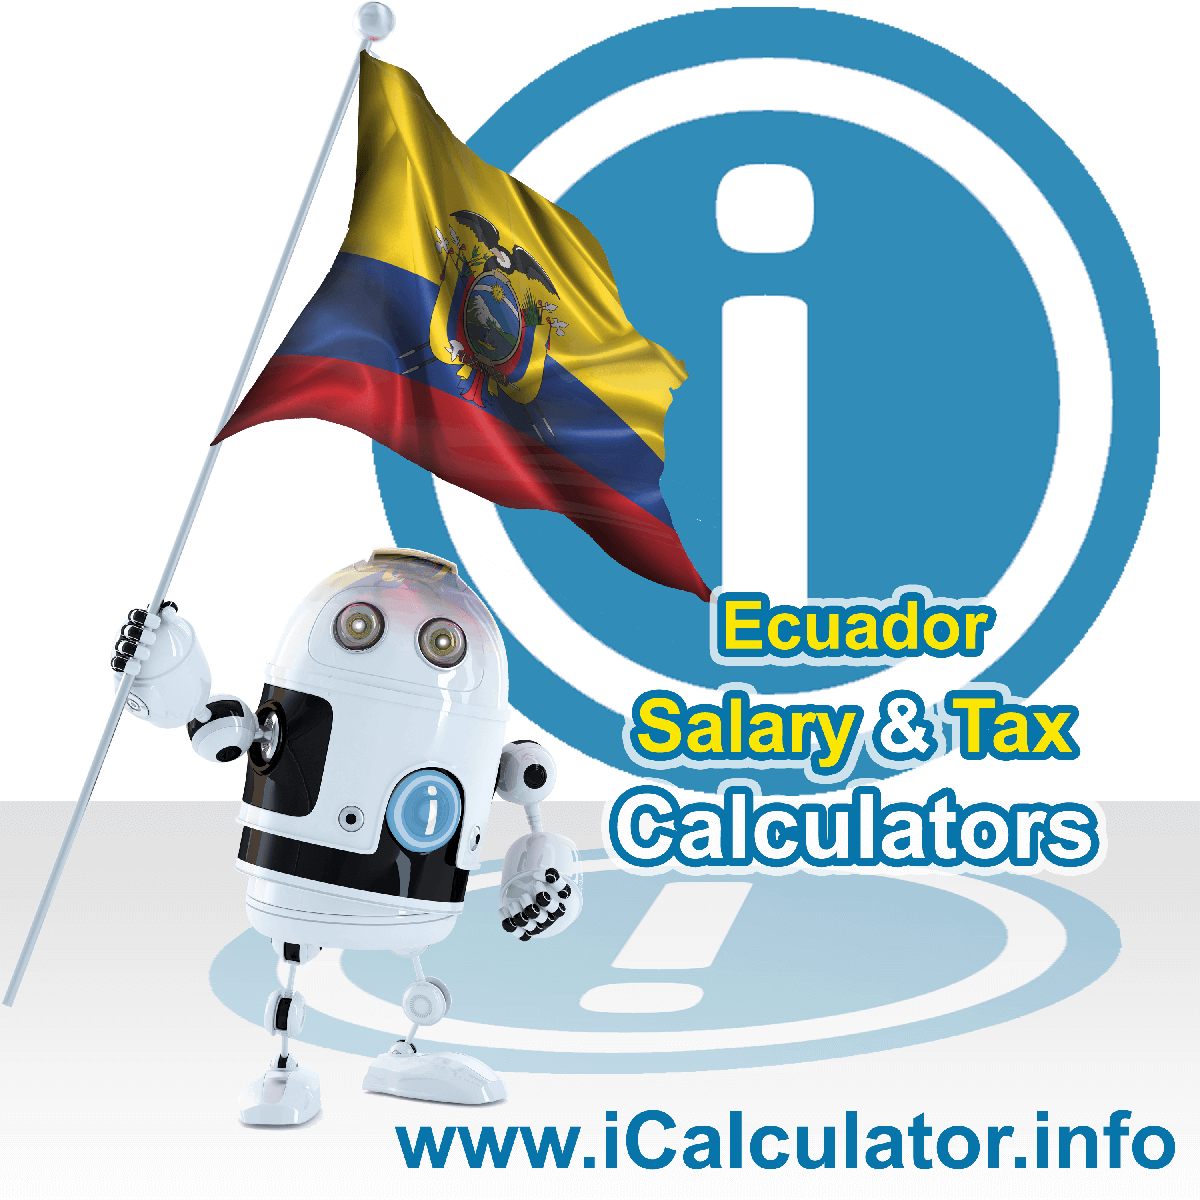 Ecuador Tax Calculator. This image shows the Ecuador flag and information relating to the tax formula for the Ecuador Salary Calculator